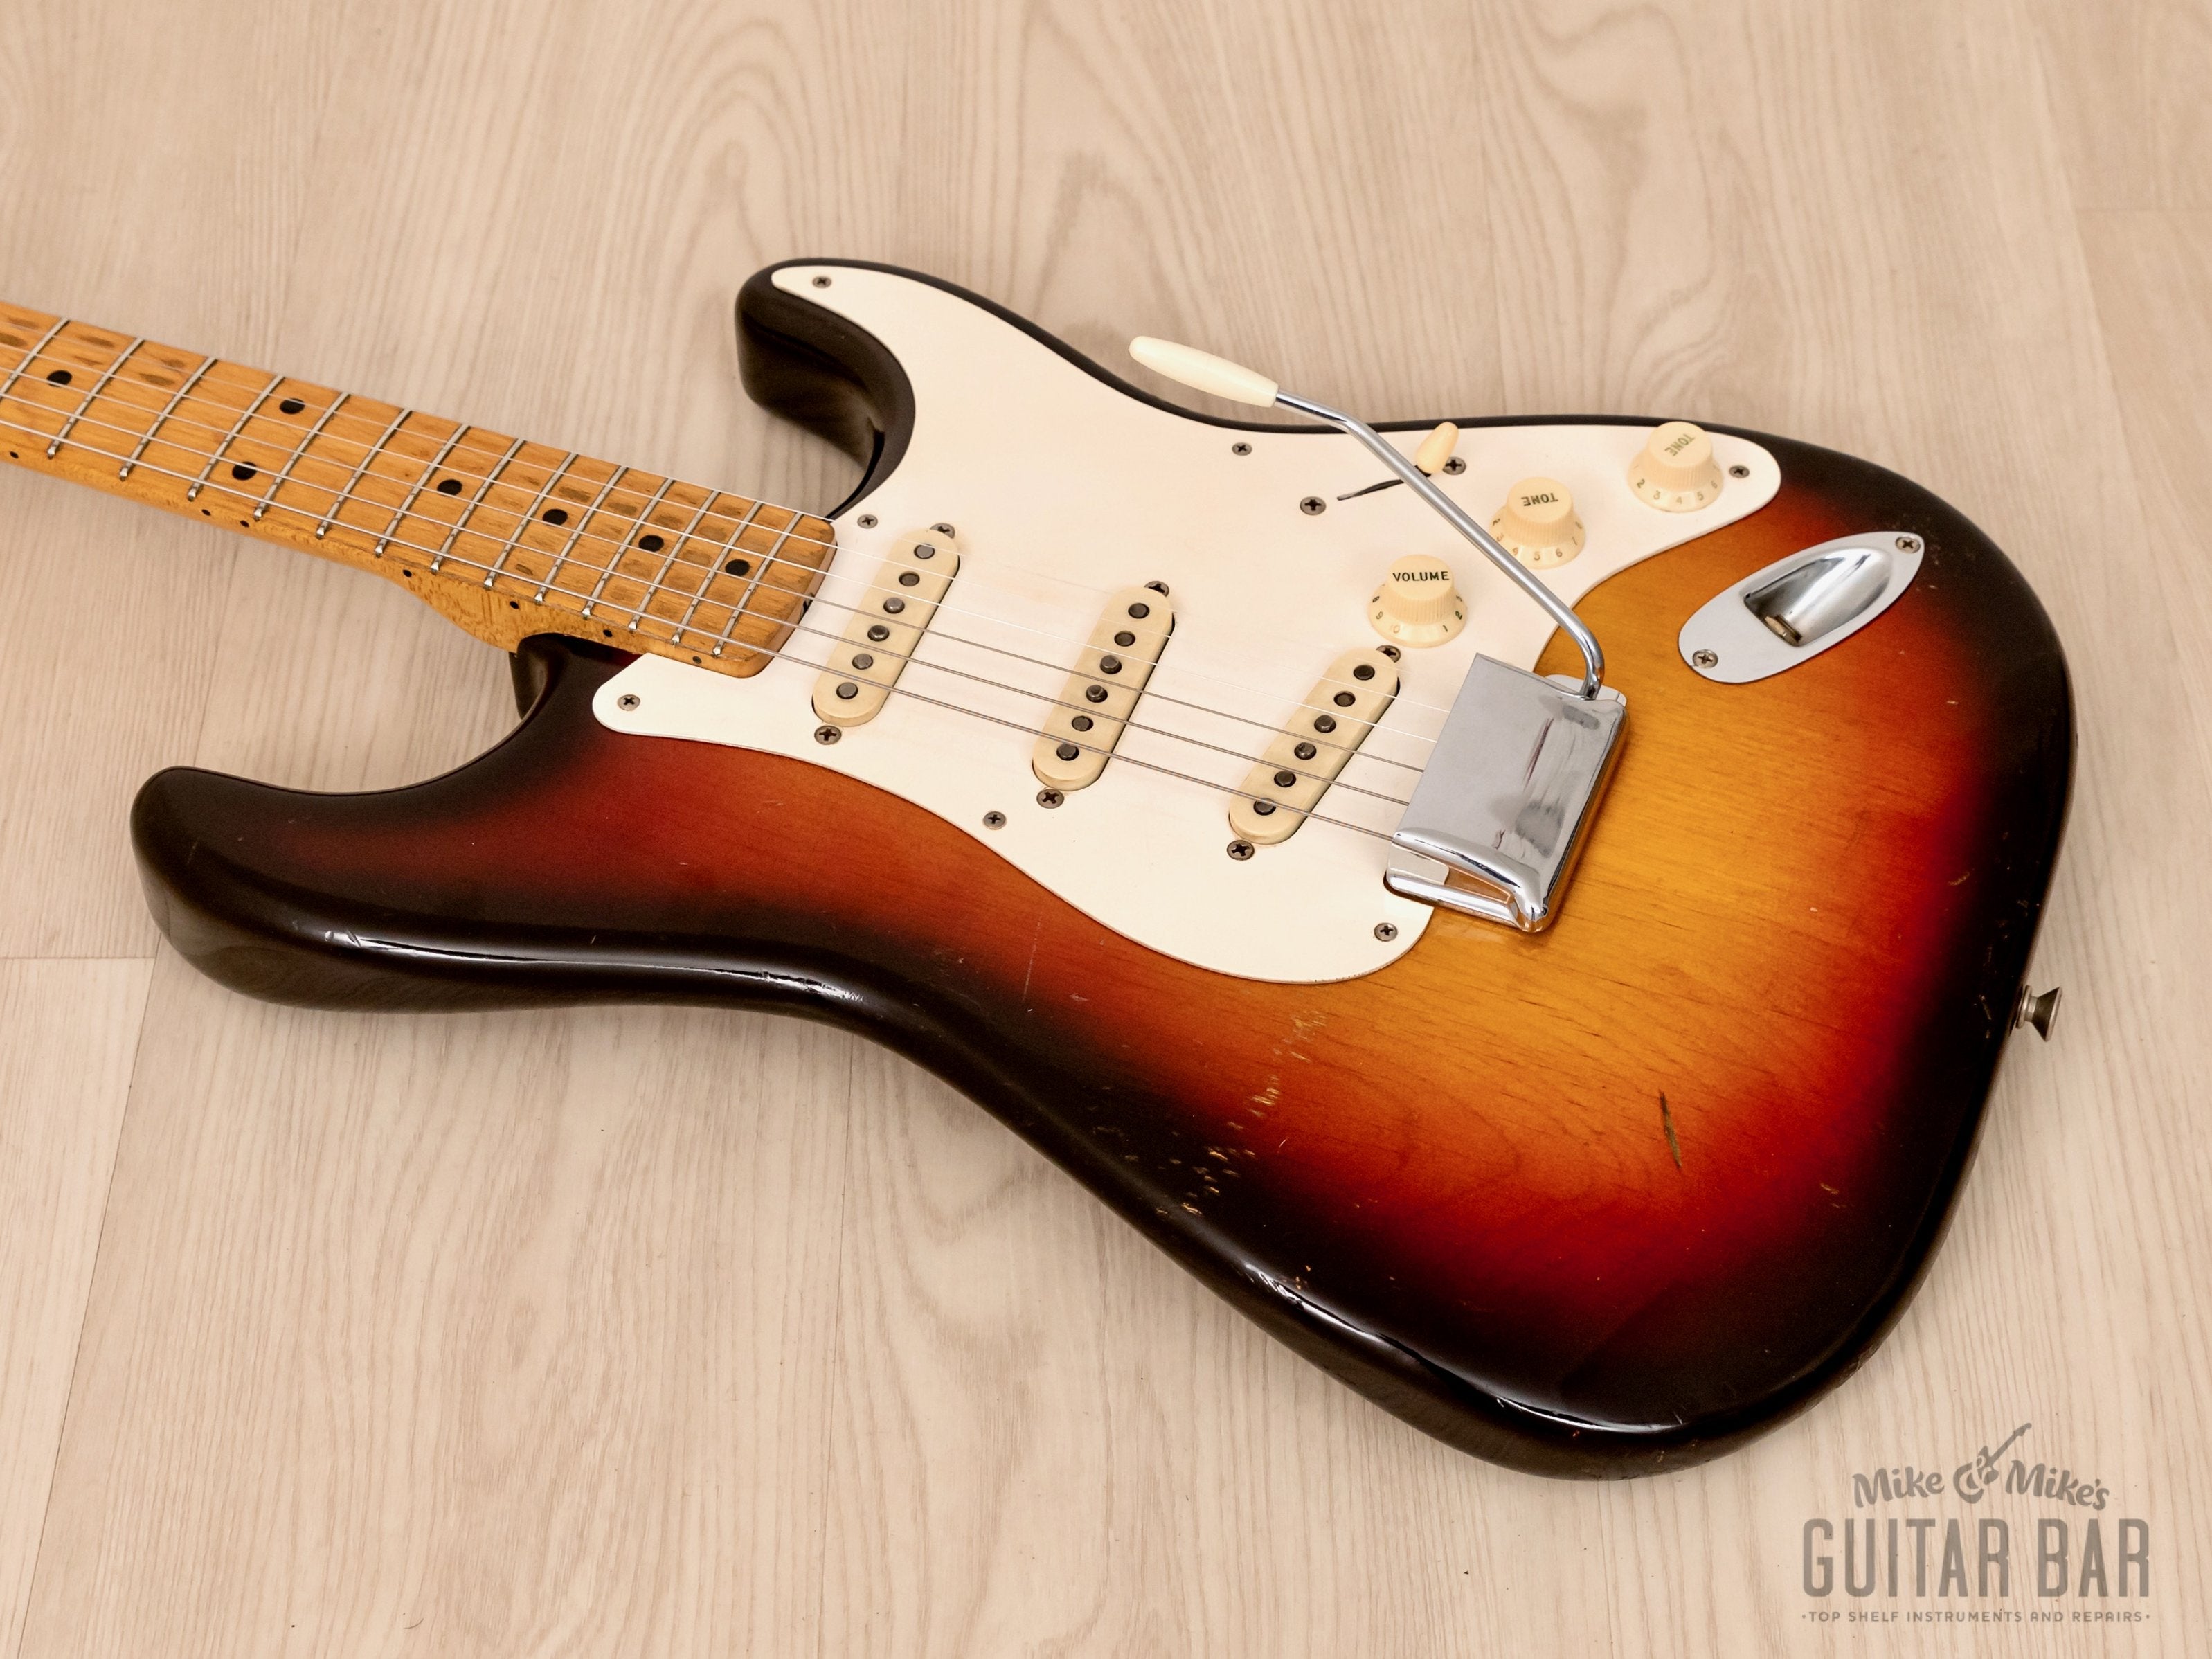 1959 Fender Stratocaster Vintage Guitar, Collector-Grade w/ Tweed Case